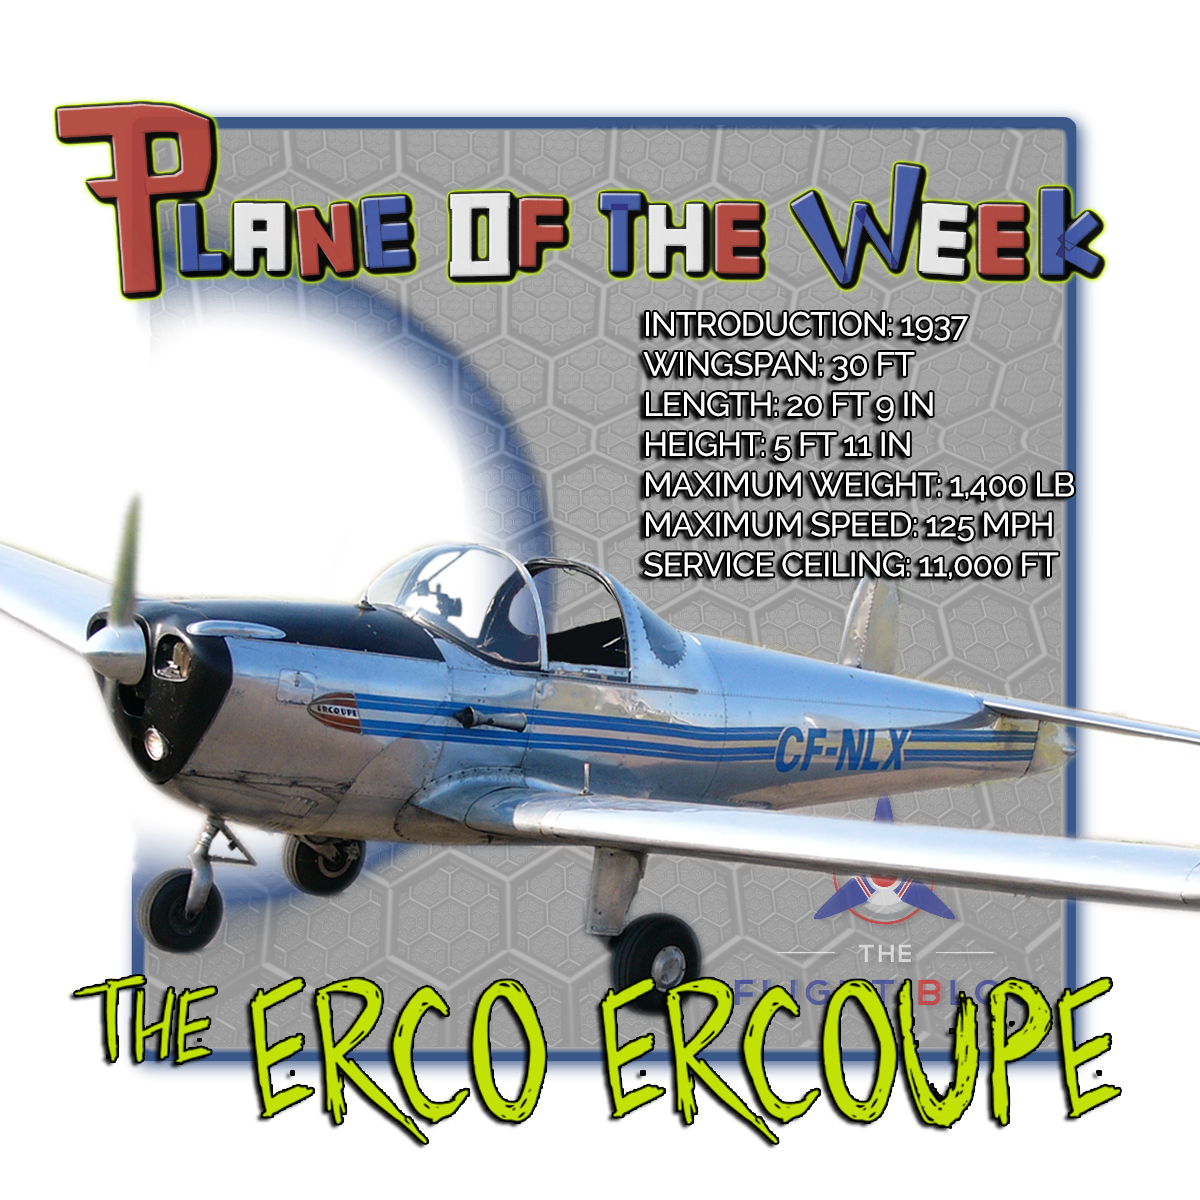 Plane of the week, erco, erco ercoupe, erco ercoupe plane specs